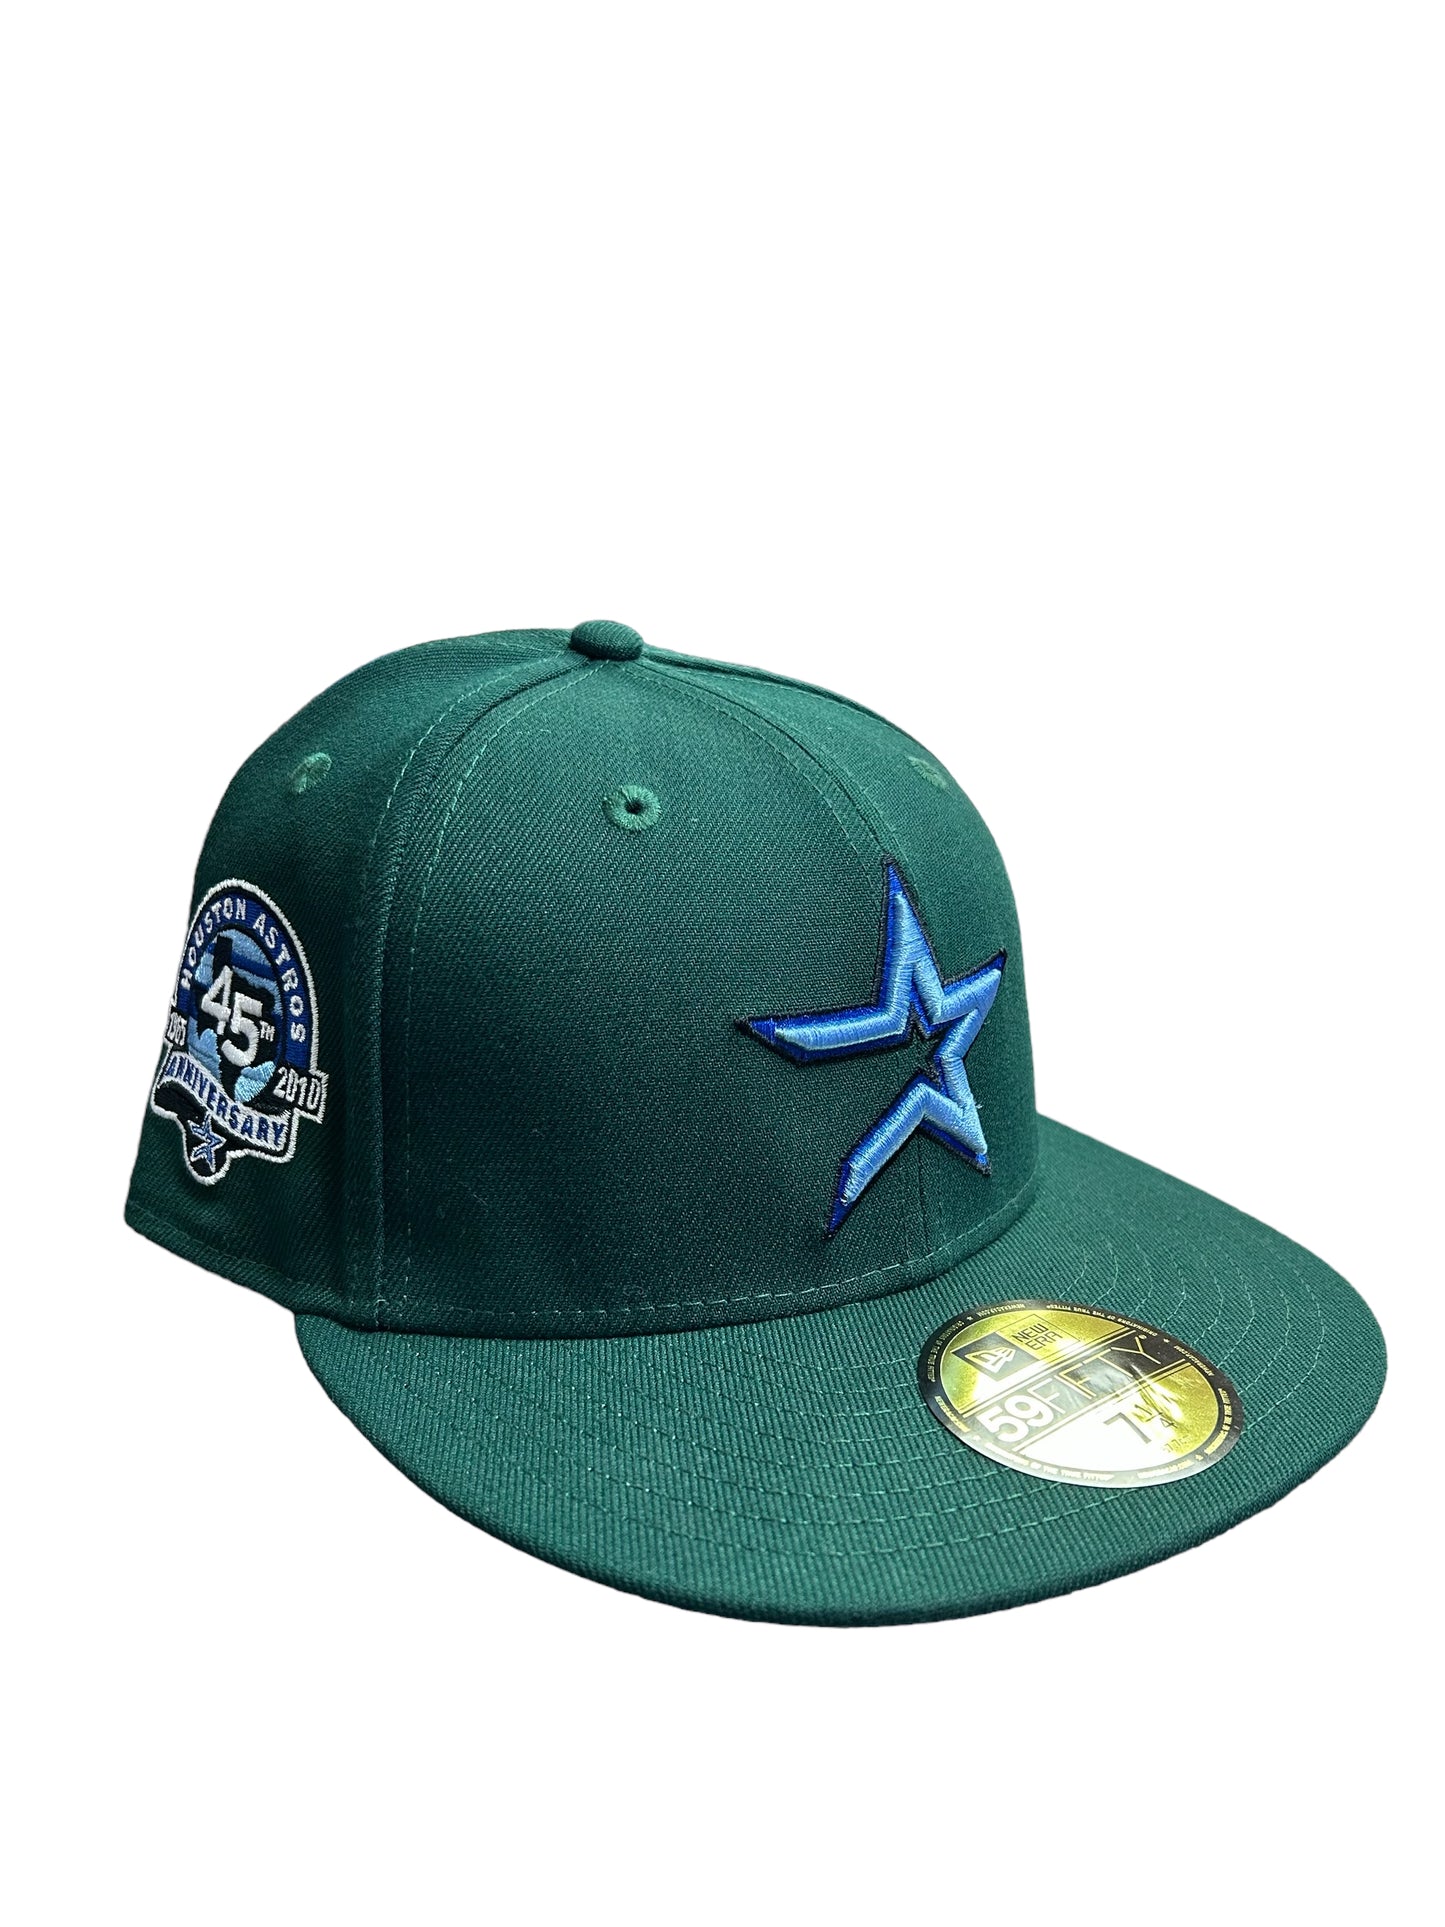 Houston Astros Open Star Green/Blue Hat